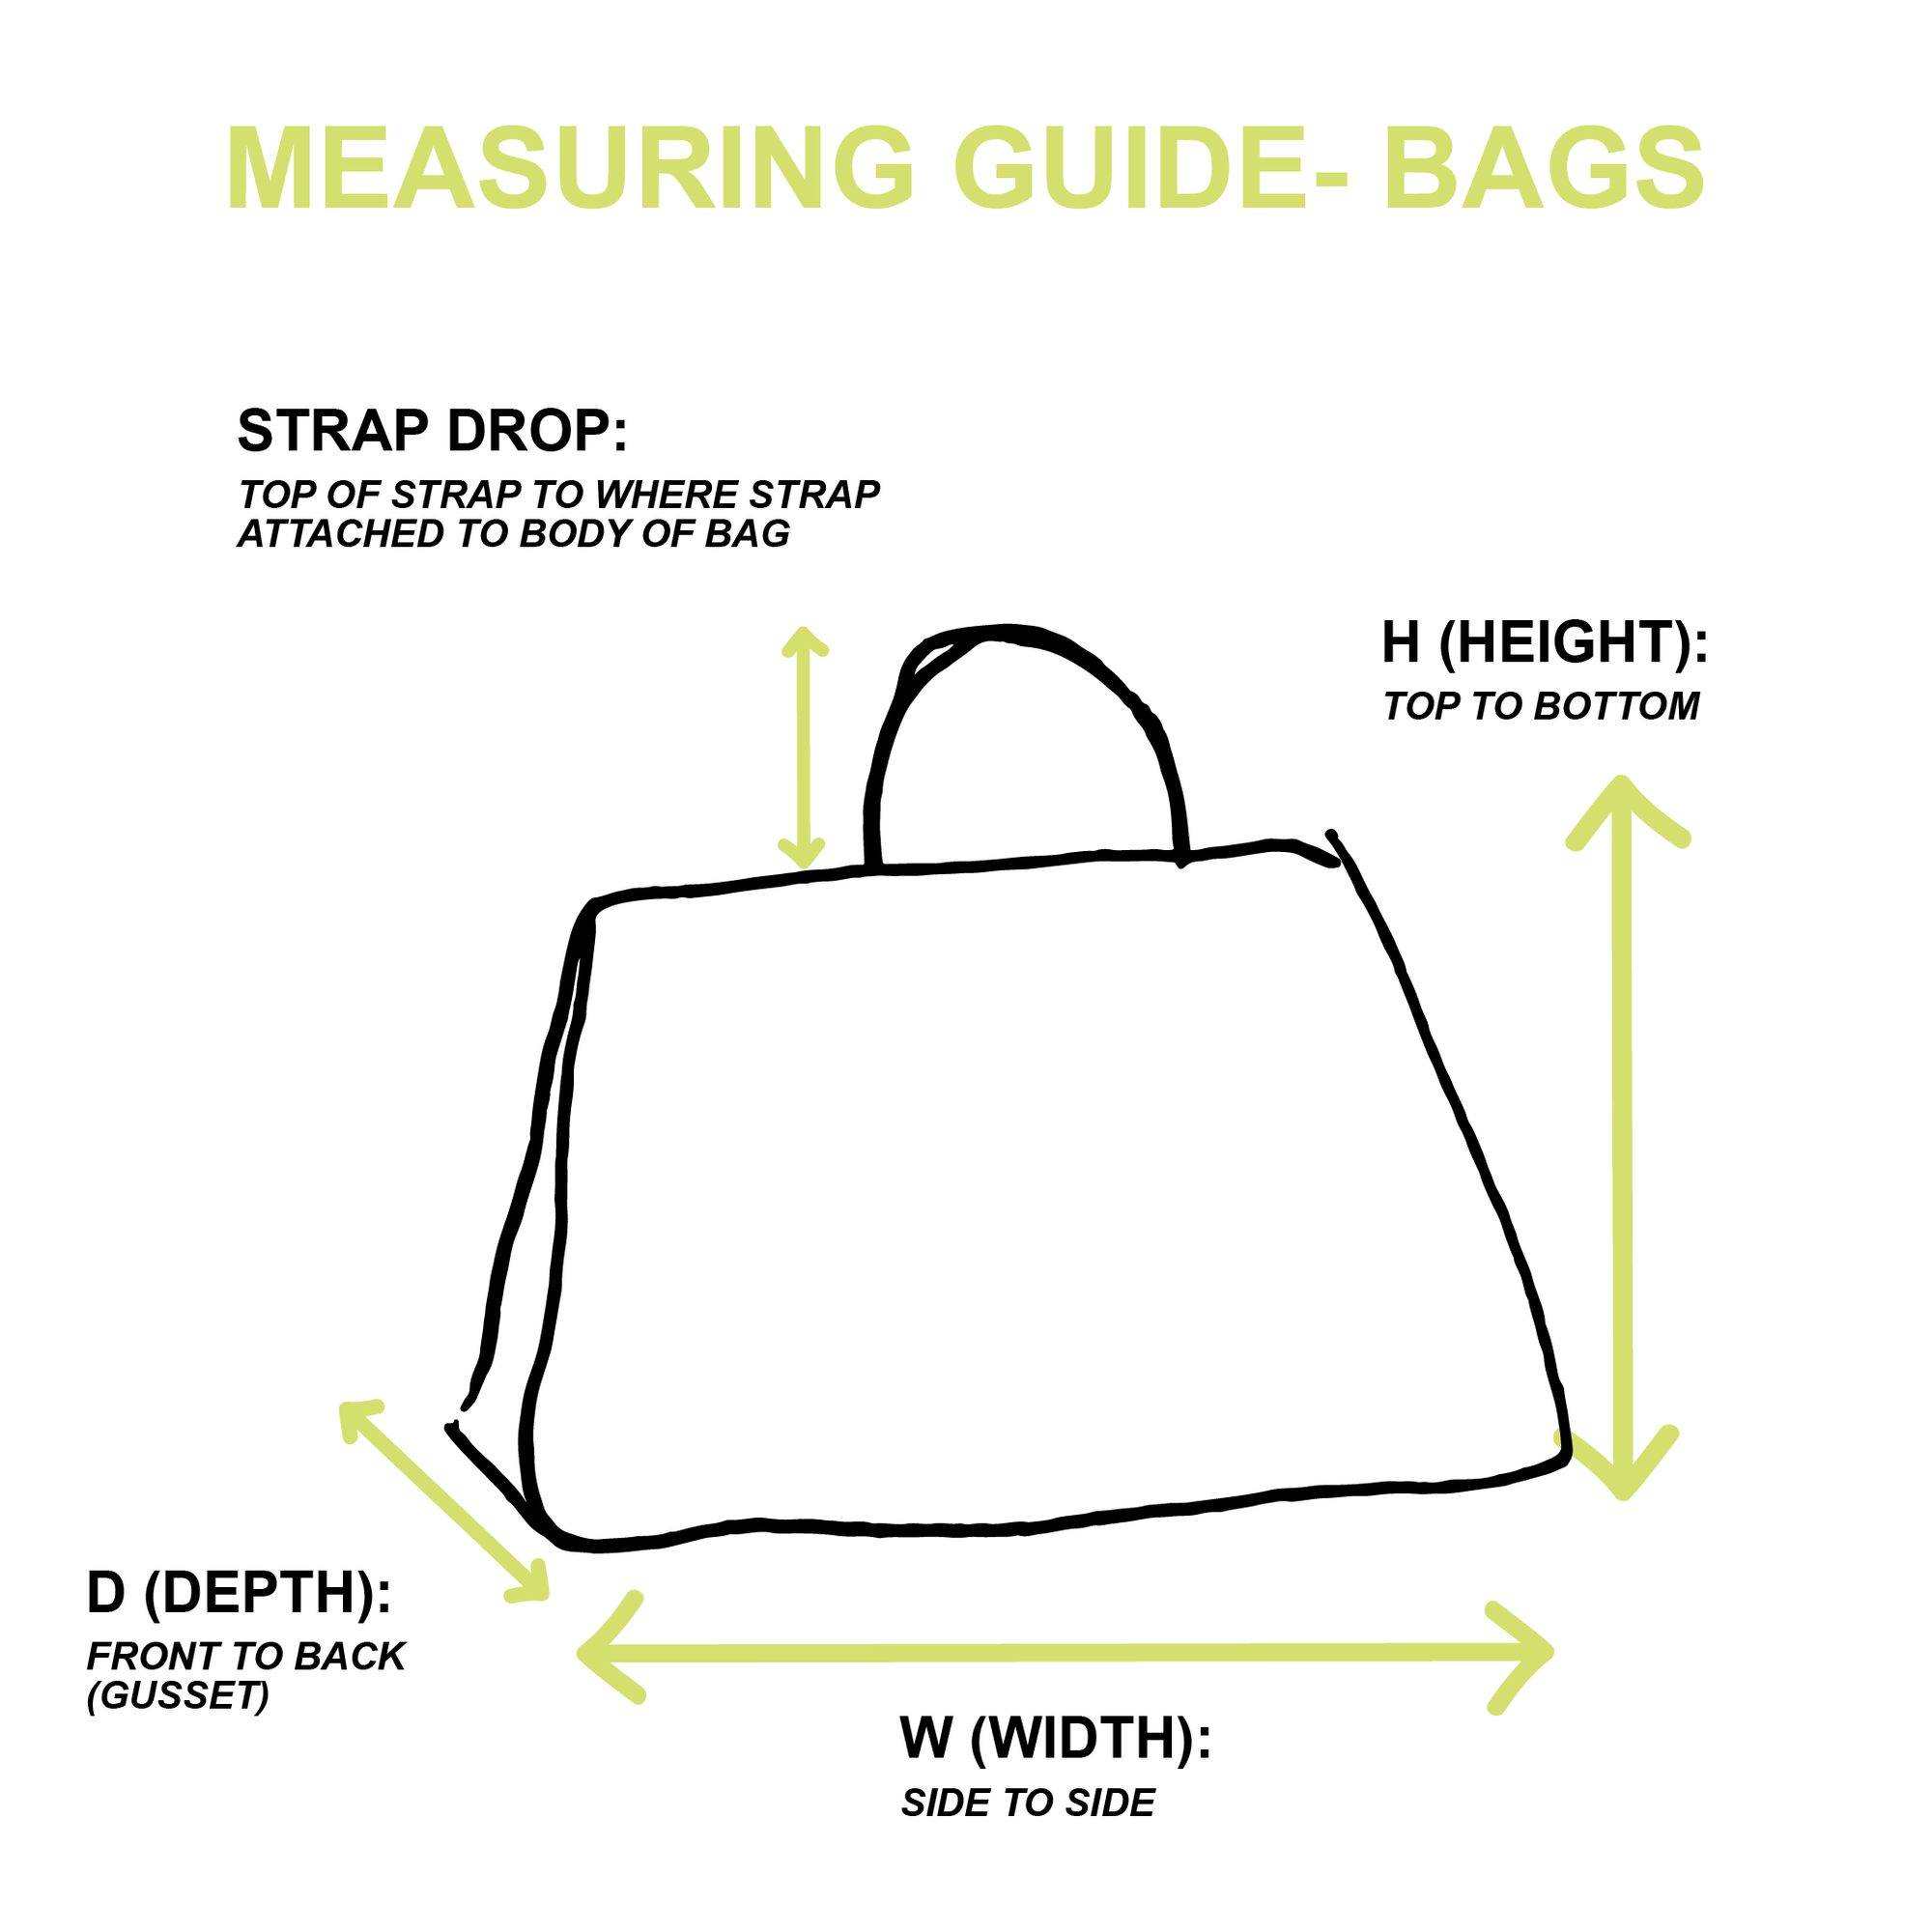 Fendi Brown Logo Backpack - Handbags